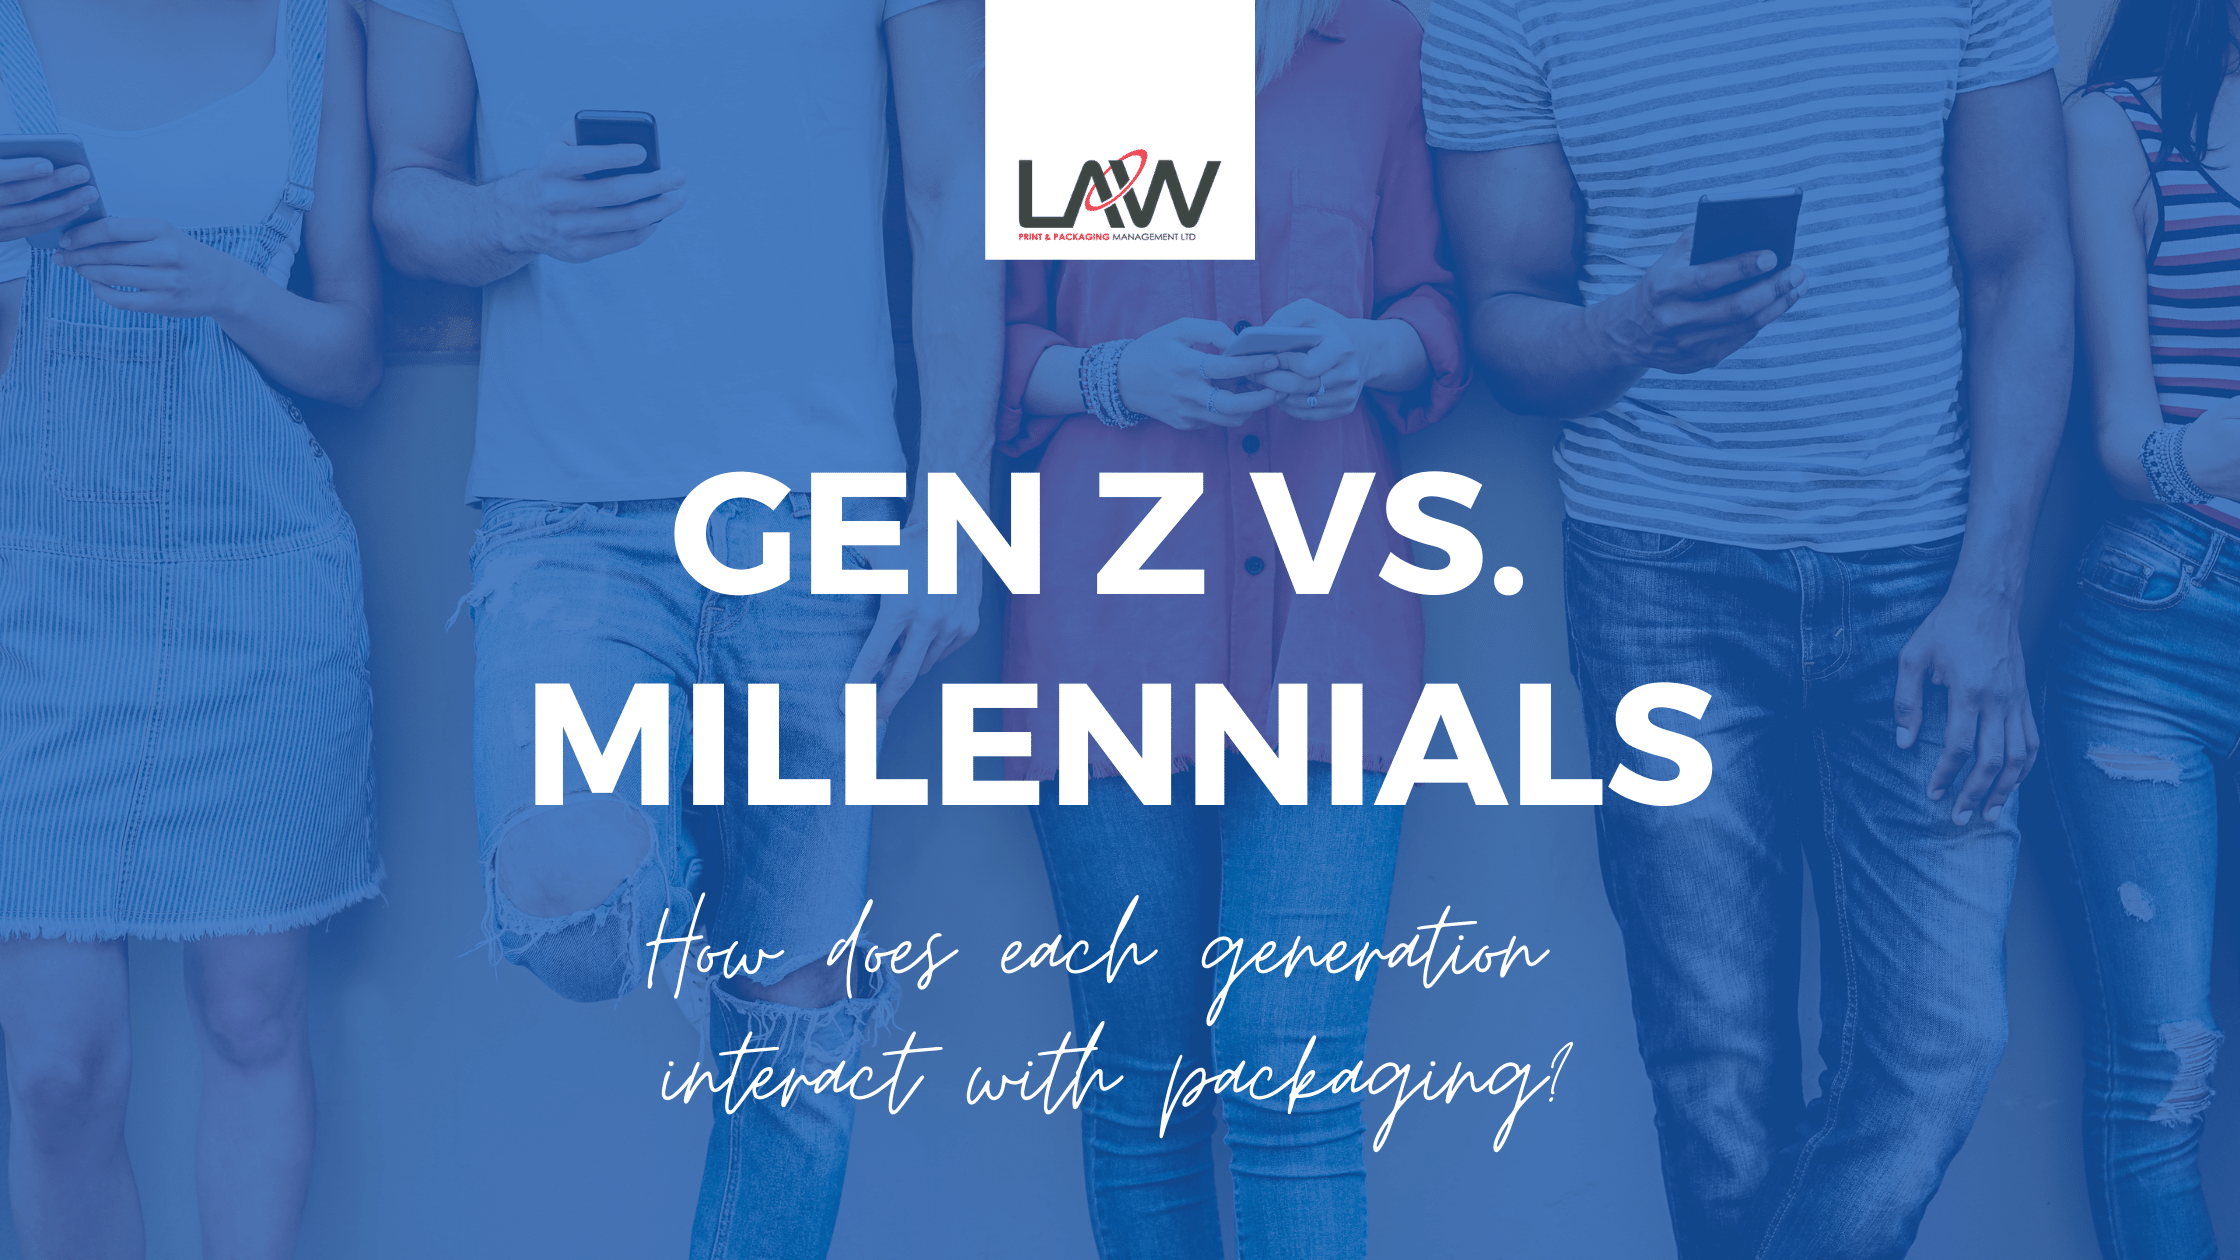 Gen Z vs Millennials: Interacting with Packaging